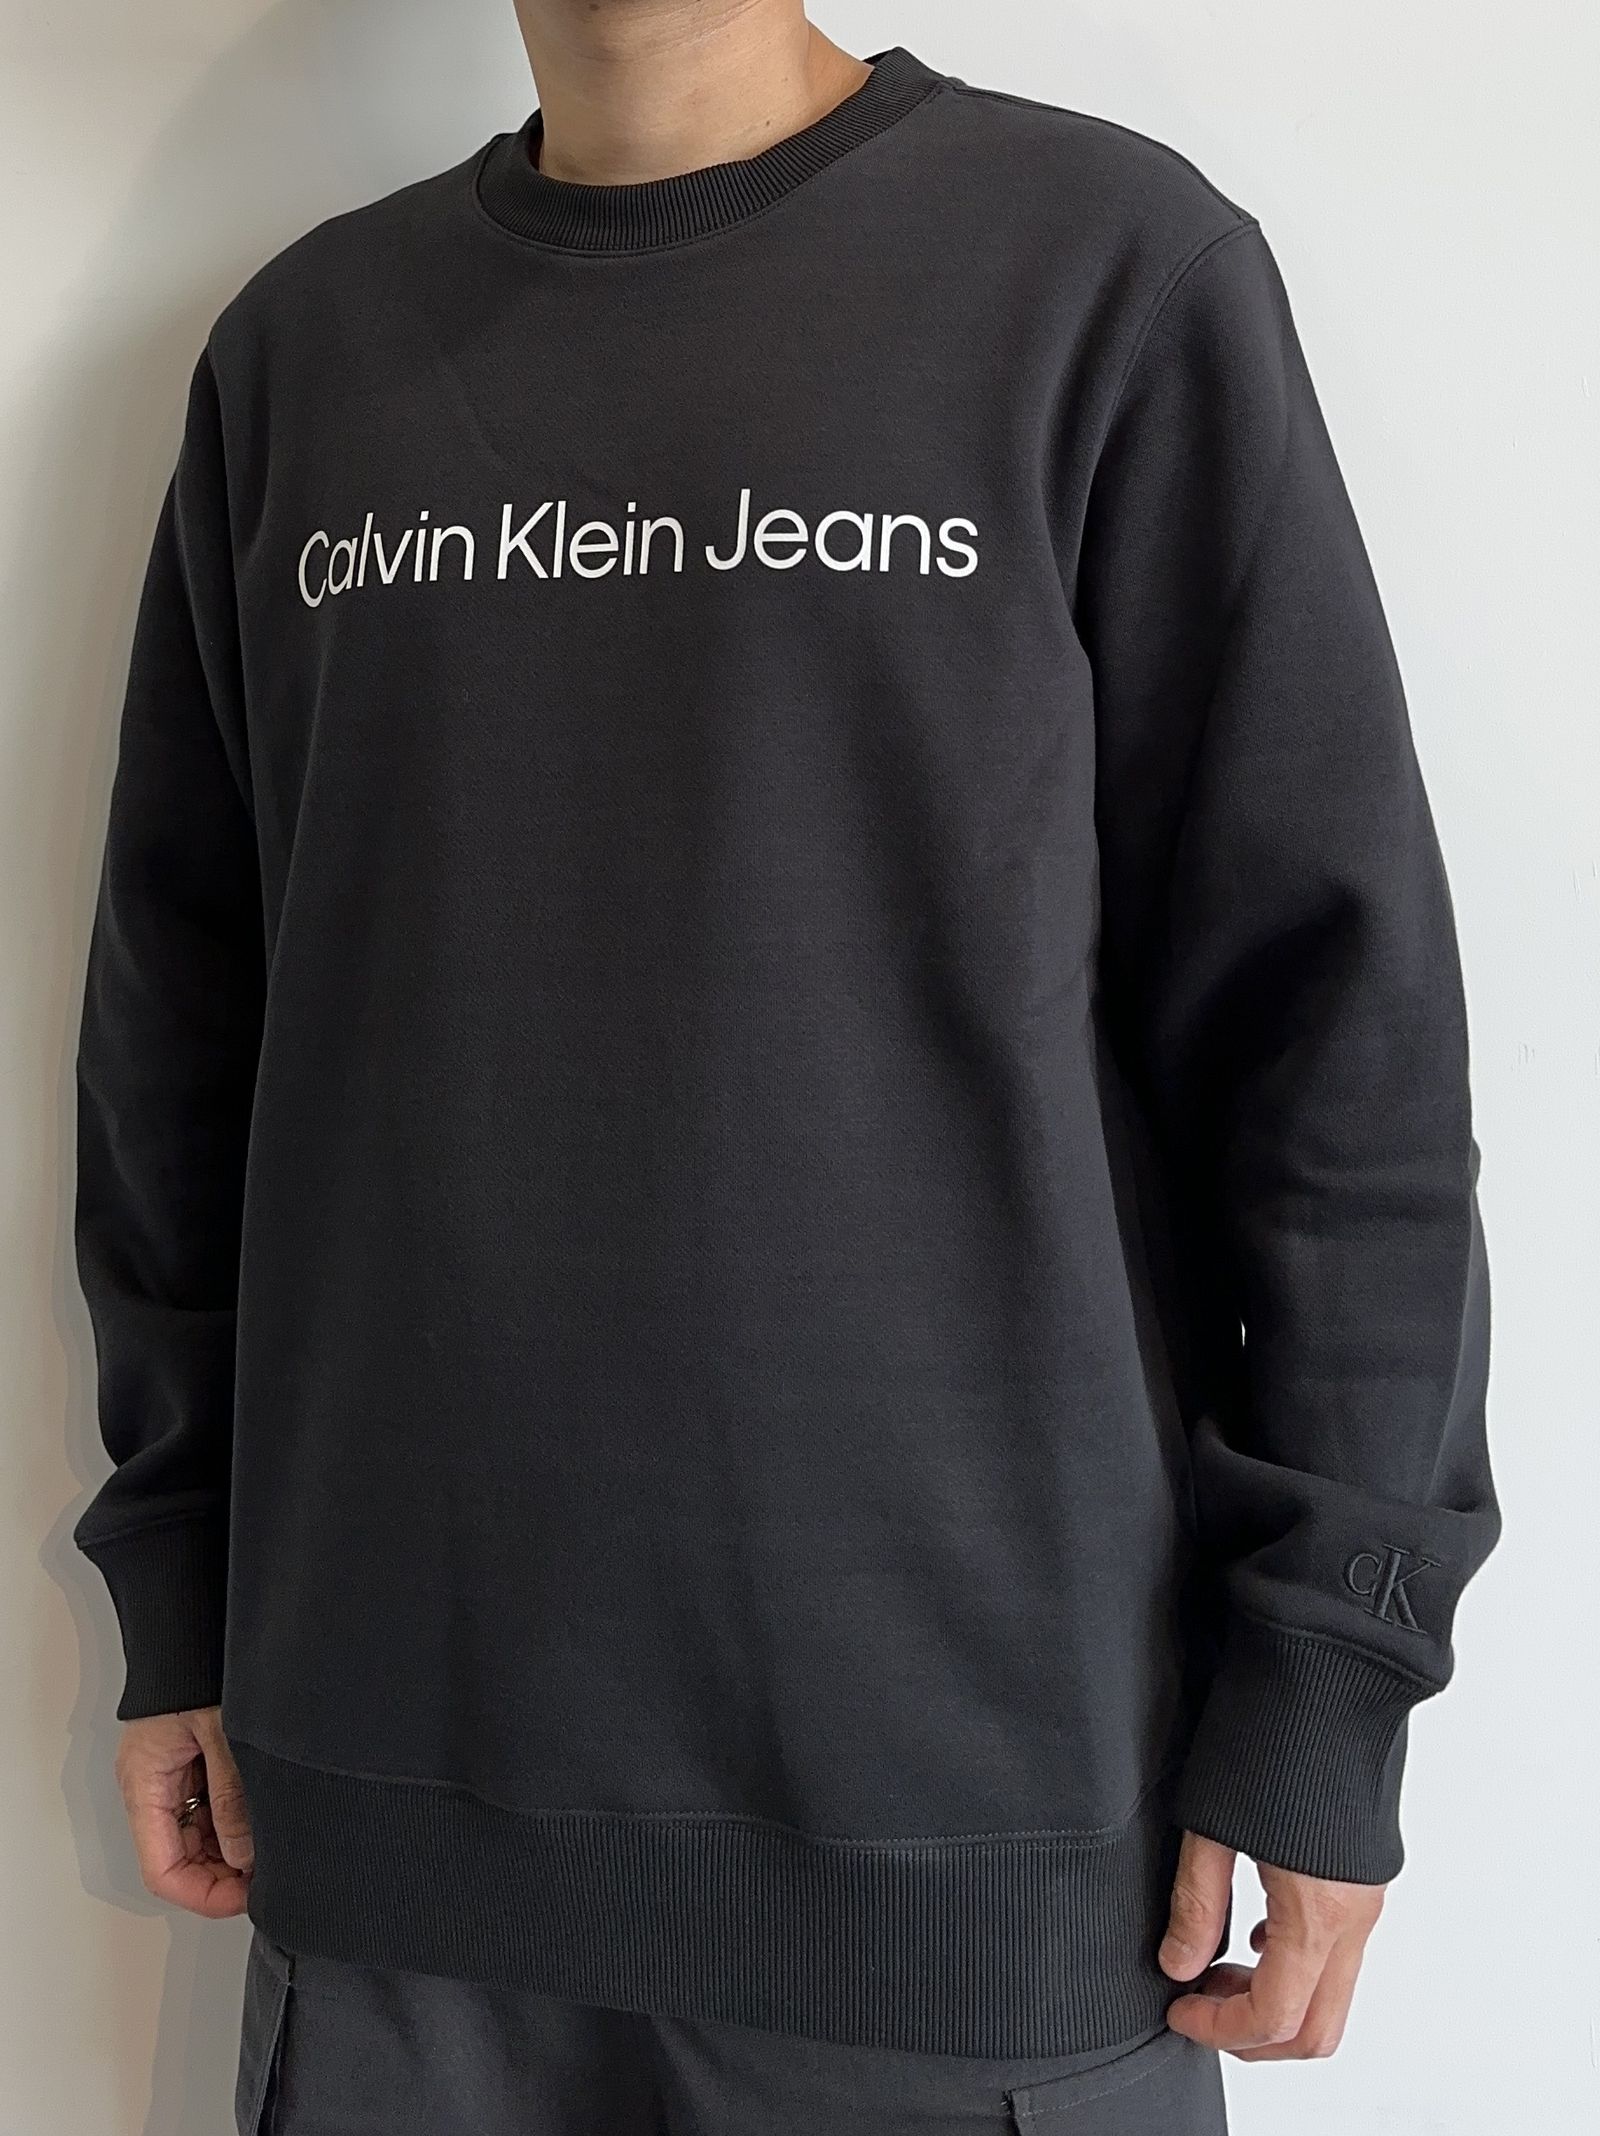 Calvin Klein カルバンクライン スウェット 黒 裏起毛 トレーナー